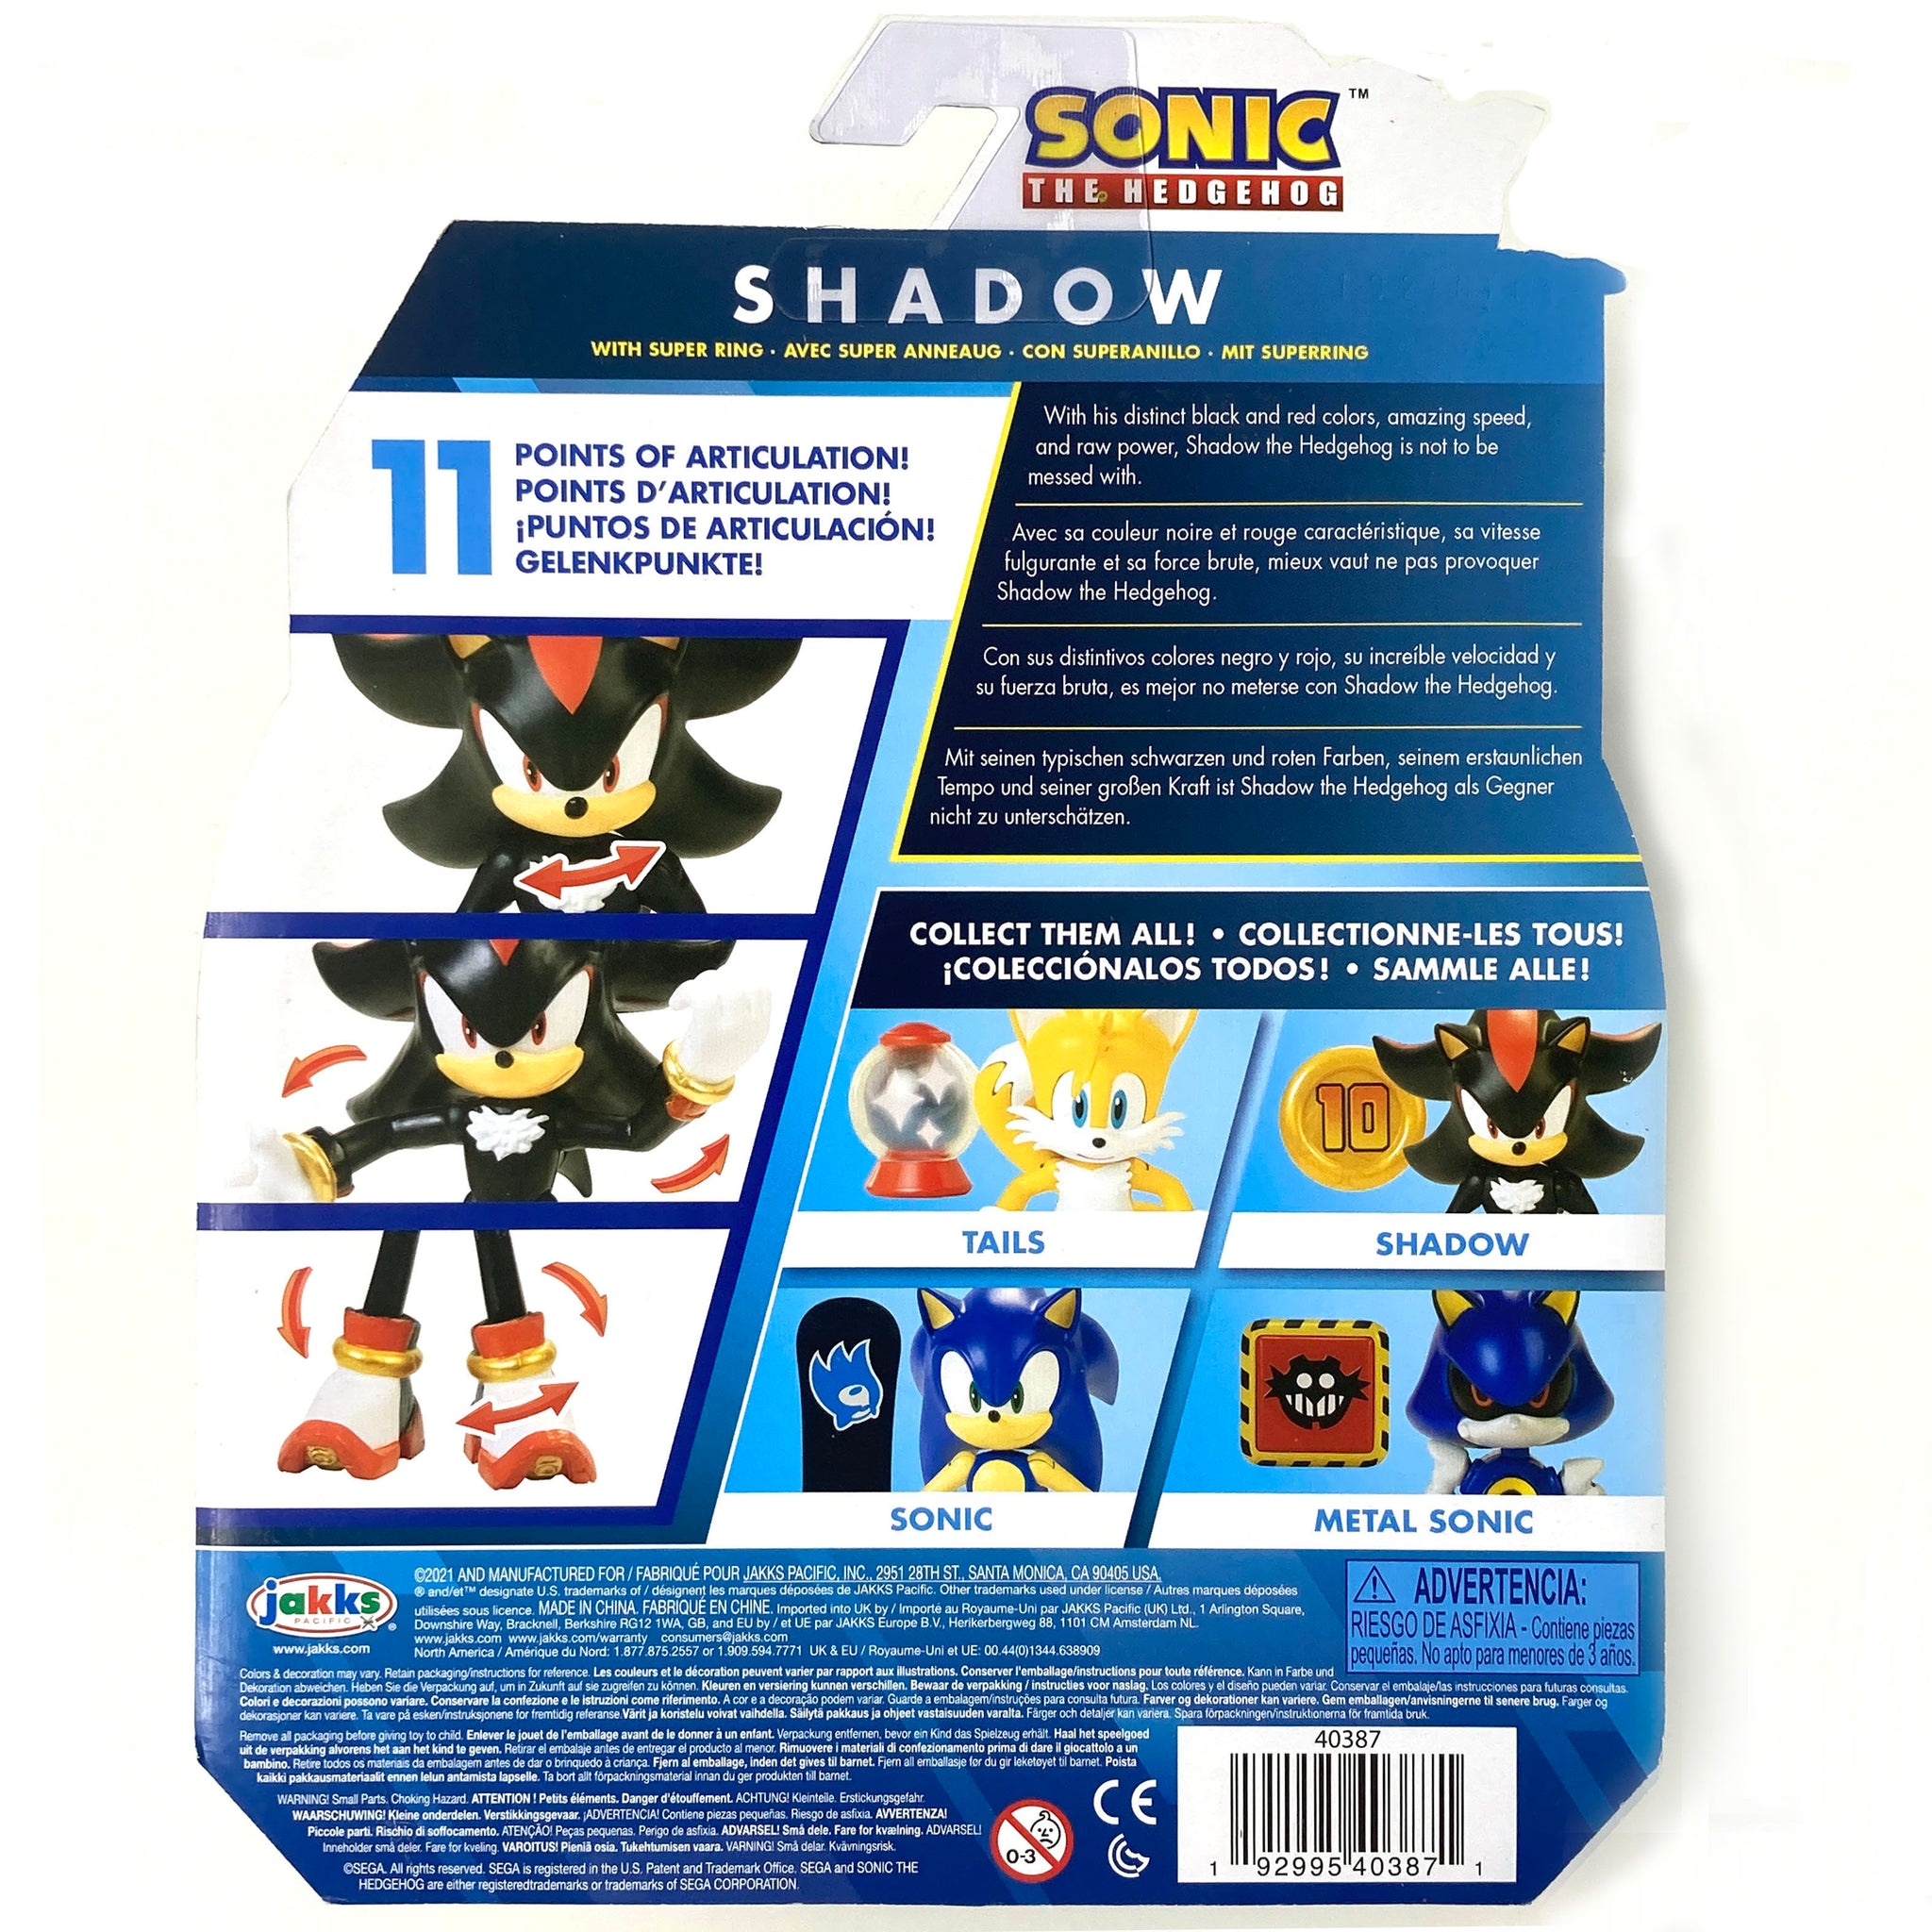 Shadow the Hedgehog (Sonic X)/Gallery  Shadow the hedgehog, Sonic, Shadow  and rouge